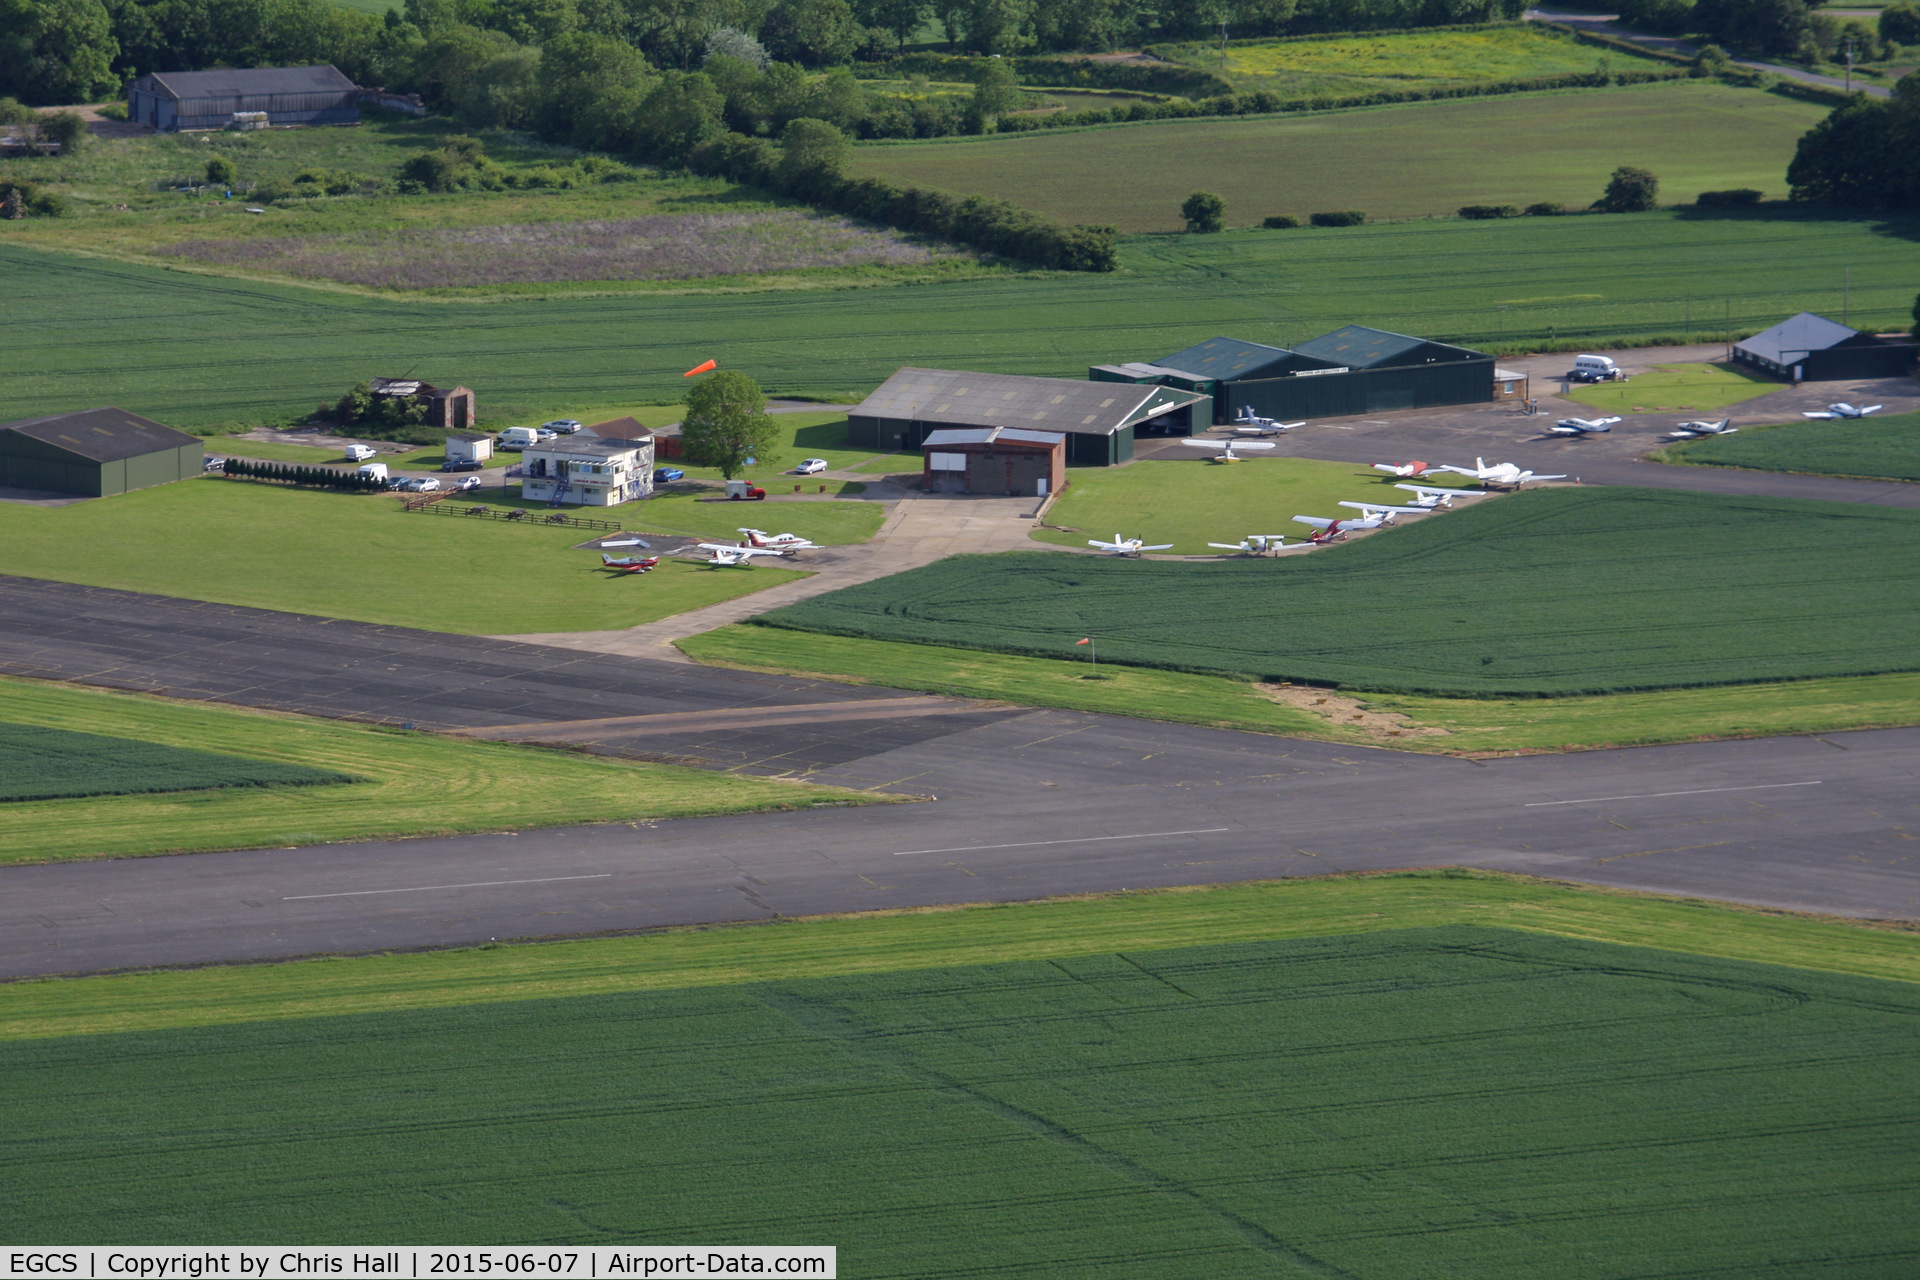 Sturgate Airfield Airport, Lincoln, England United Kingdom (EGCS) - over Sturgate